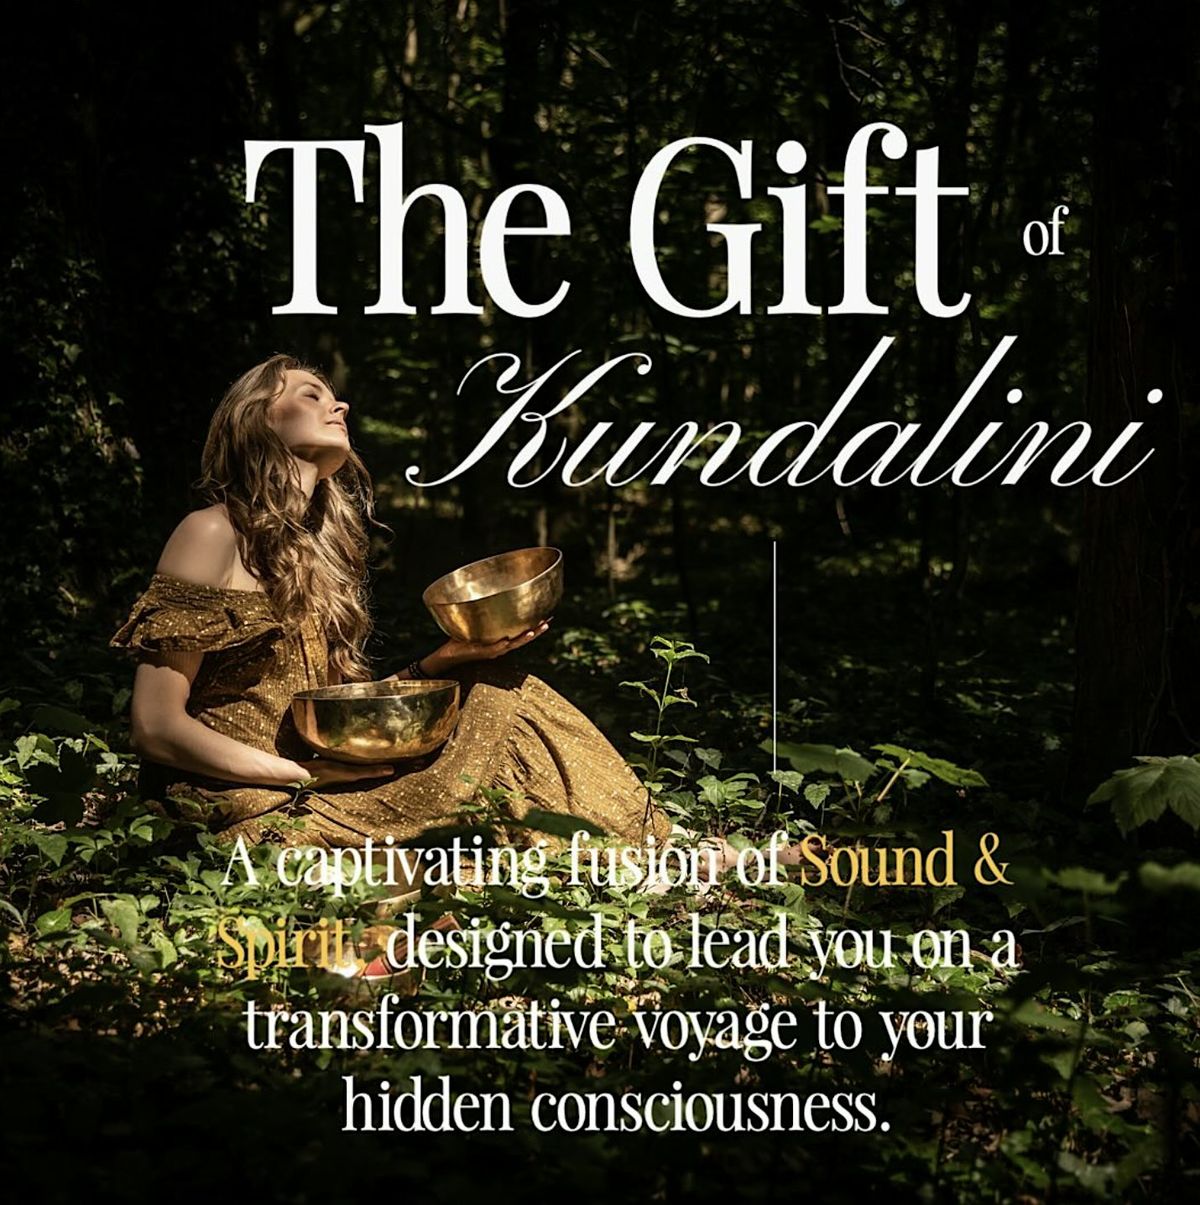 [FULL MOON] Kundalini Activation & Sound Healing Ceremony | Groningen